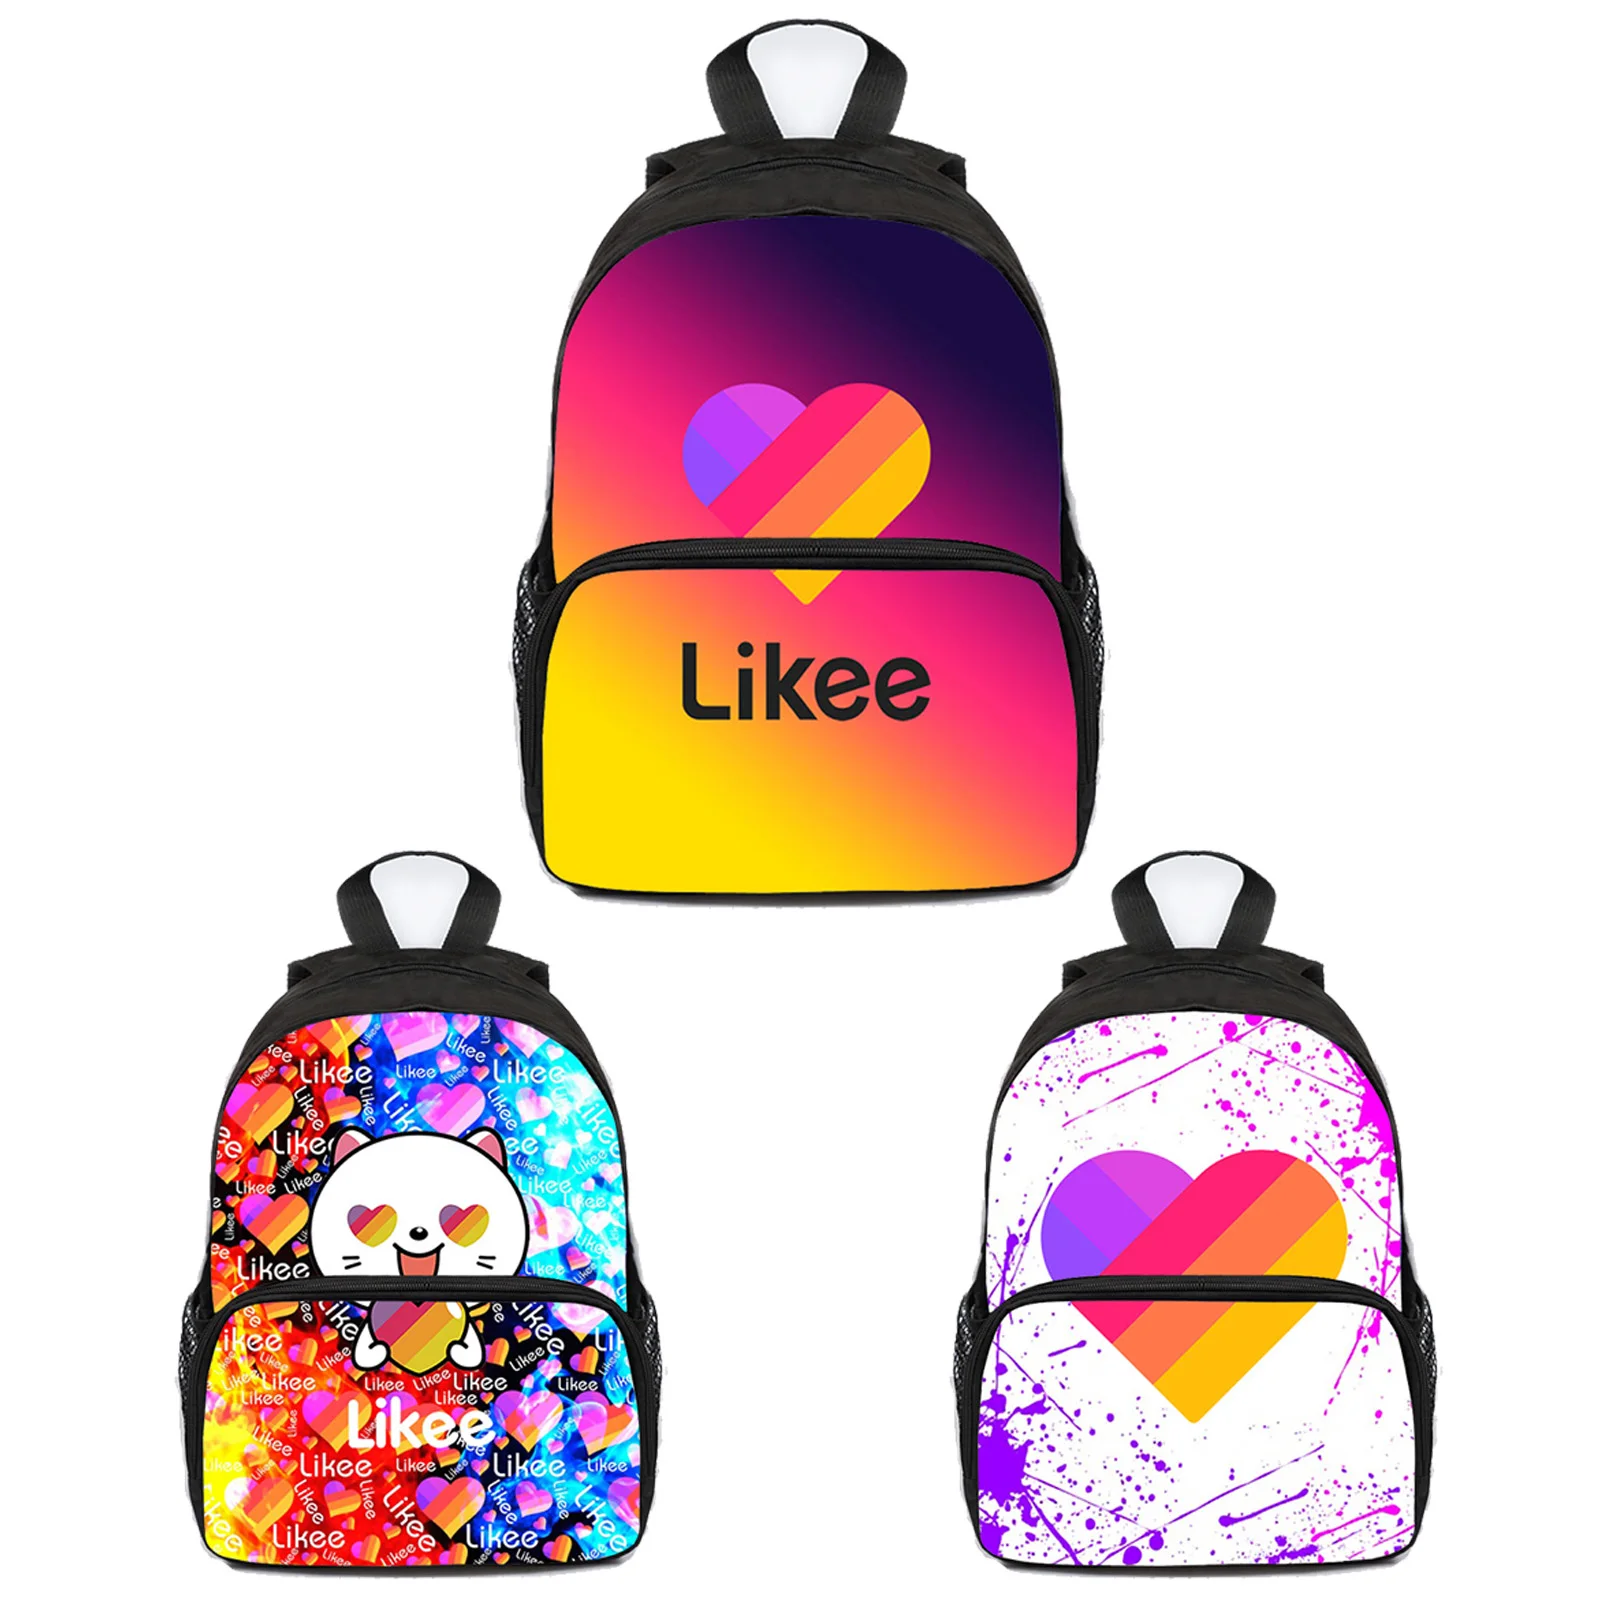 

Russia Type Like App Backpack "LIKEE 1 (Like Video)" Bag Kids 3D Printed Zipper Kindergarten Cute School Bags Bookbag 13 Inch